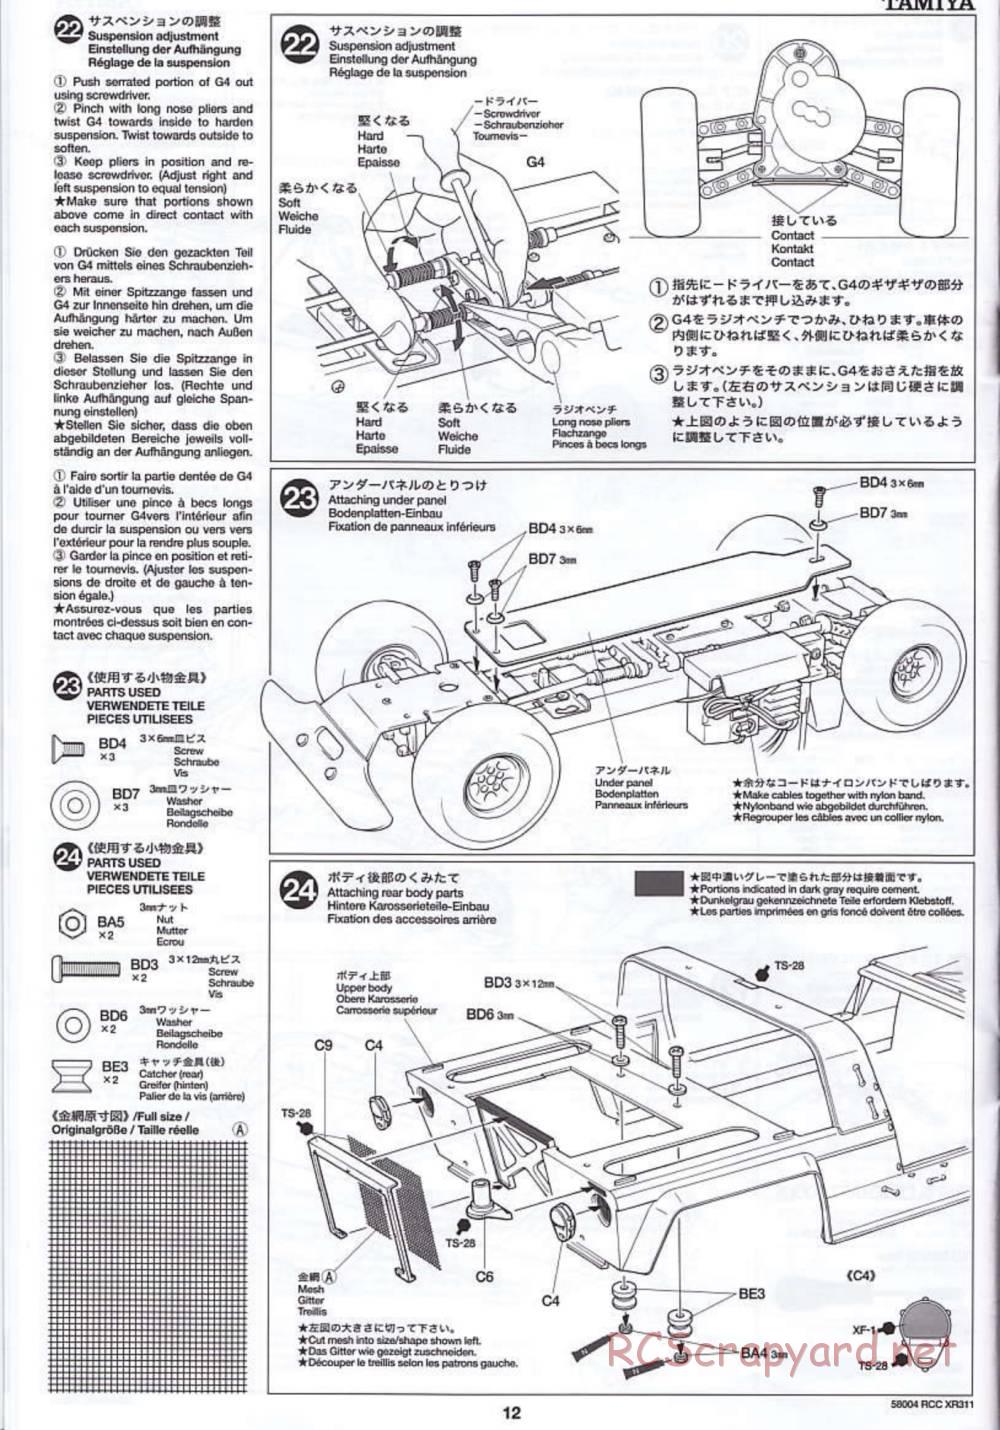 Tamiya - XR311 Combat Support Vehicle (2000) - 58004 - Manual - Page 13